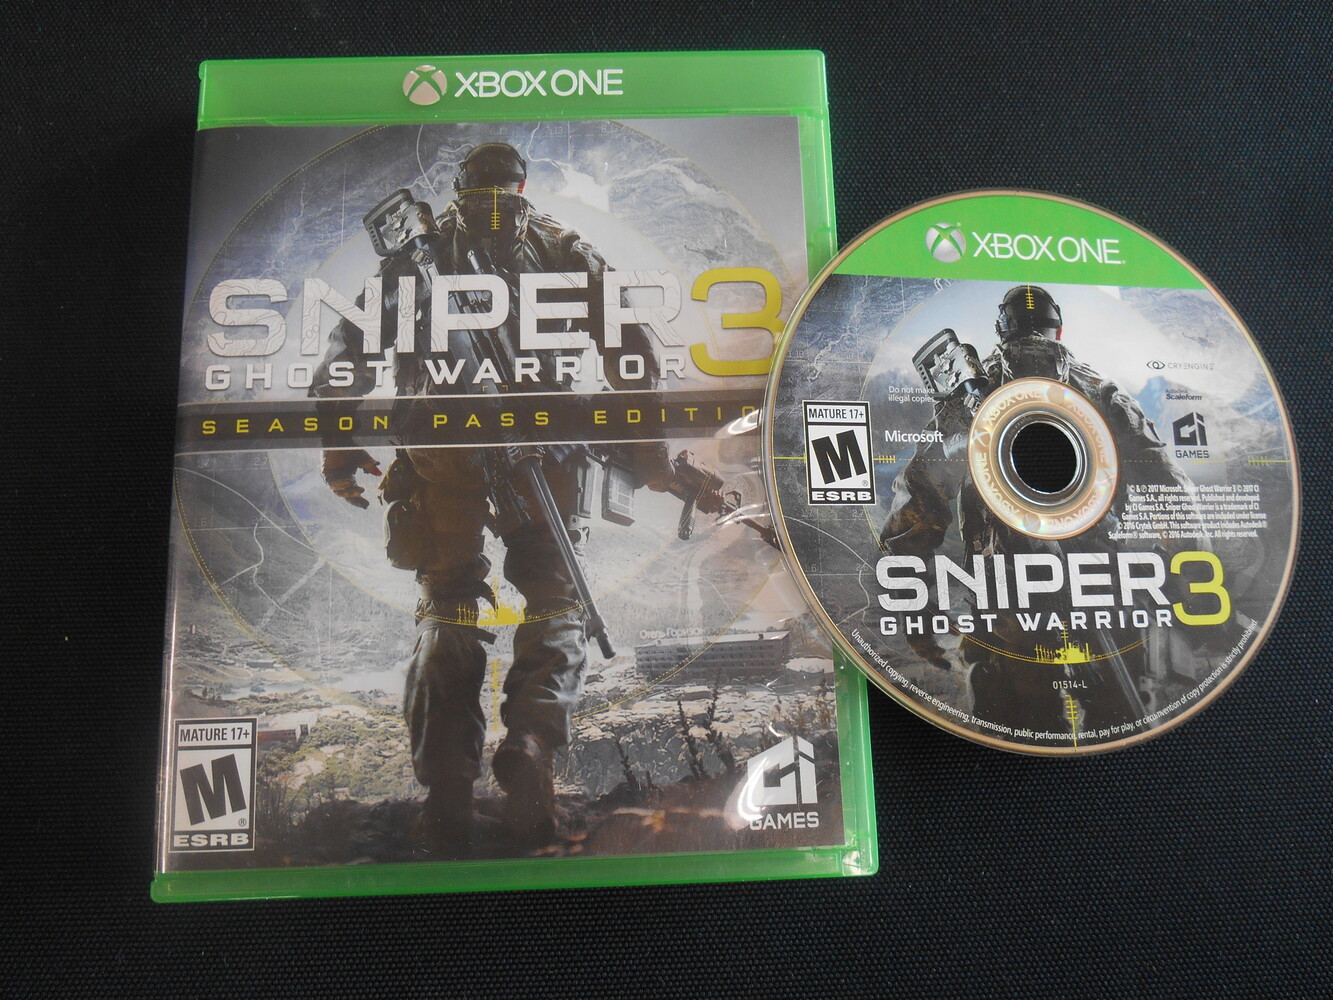 Sniper Ghost Warrior 3 - Xbox One